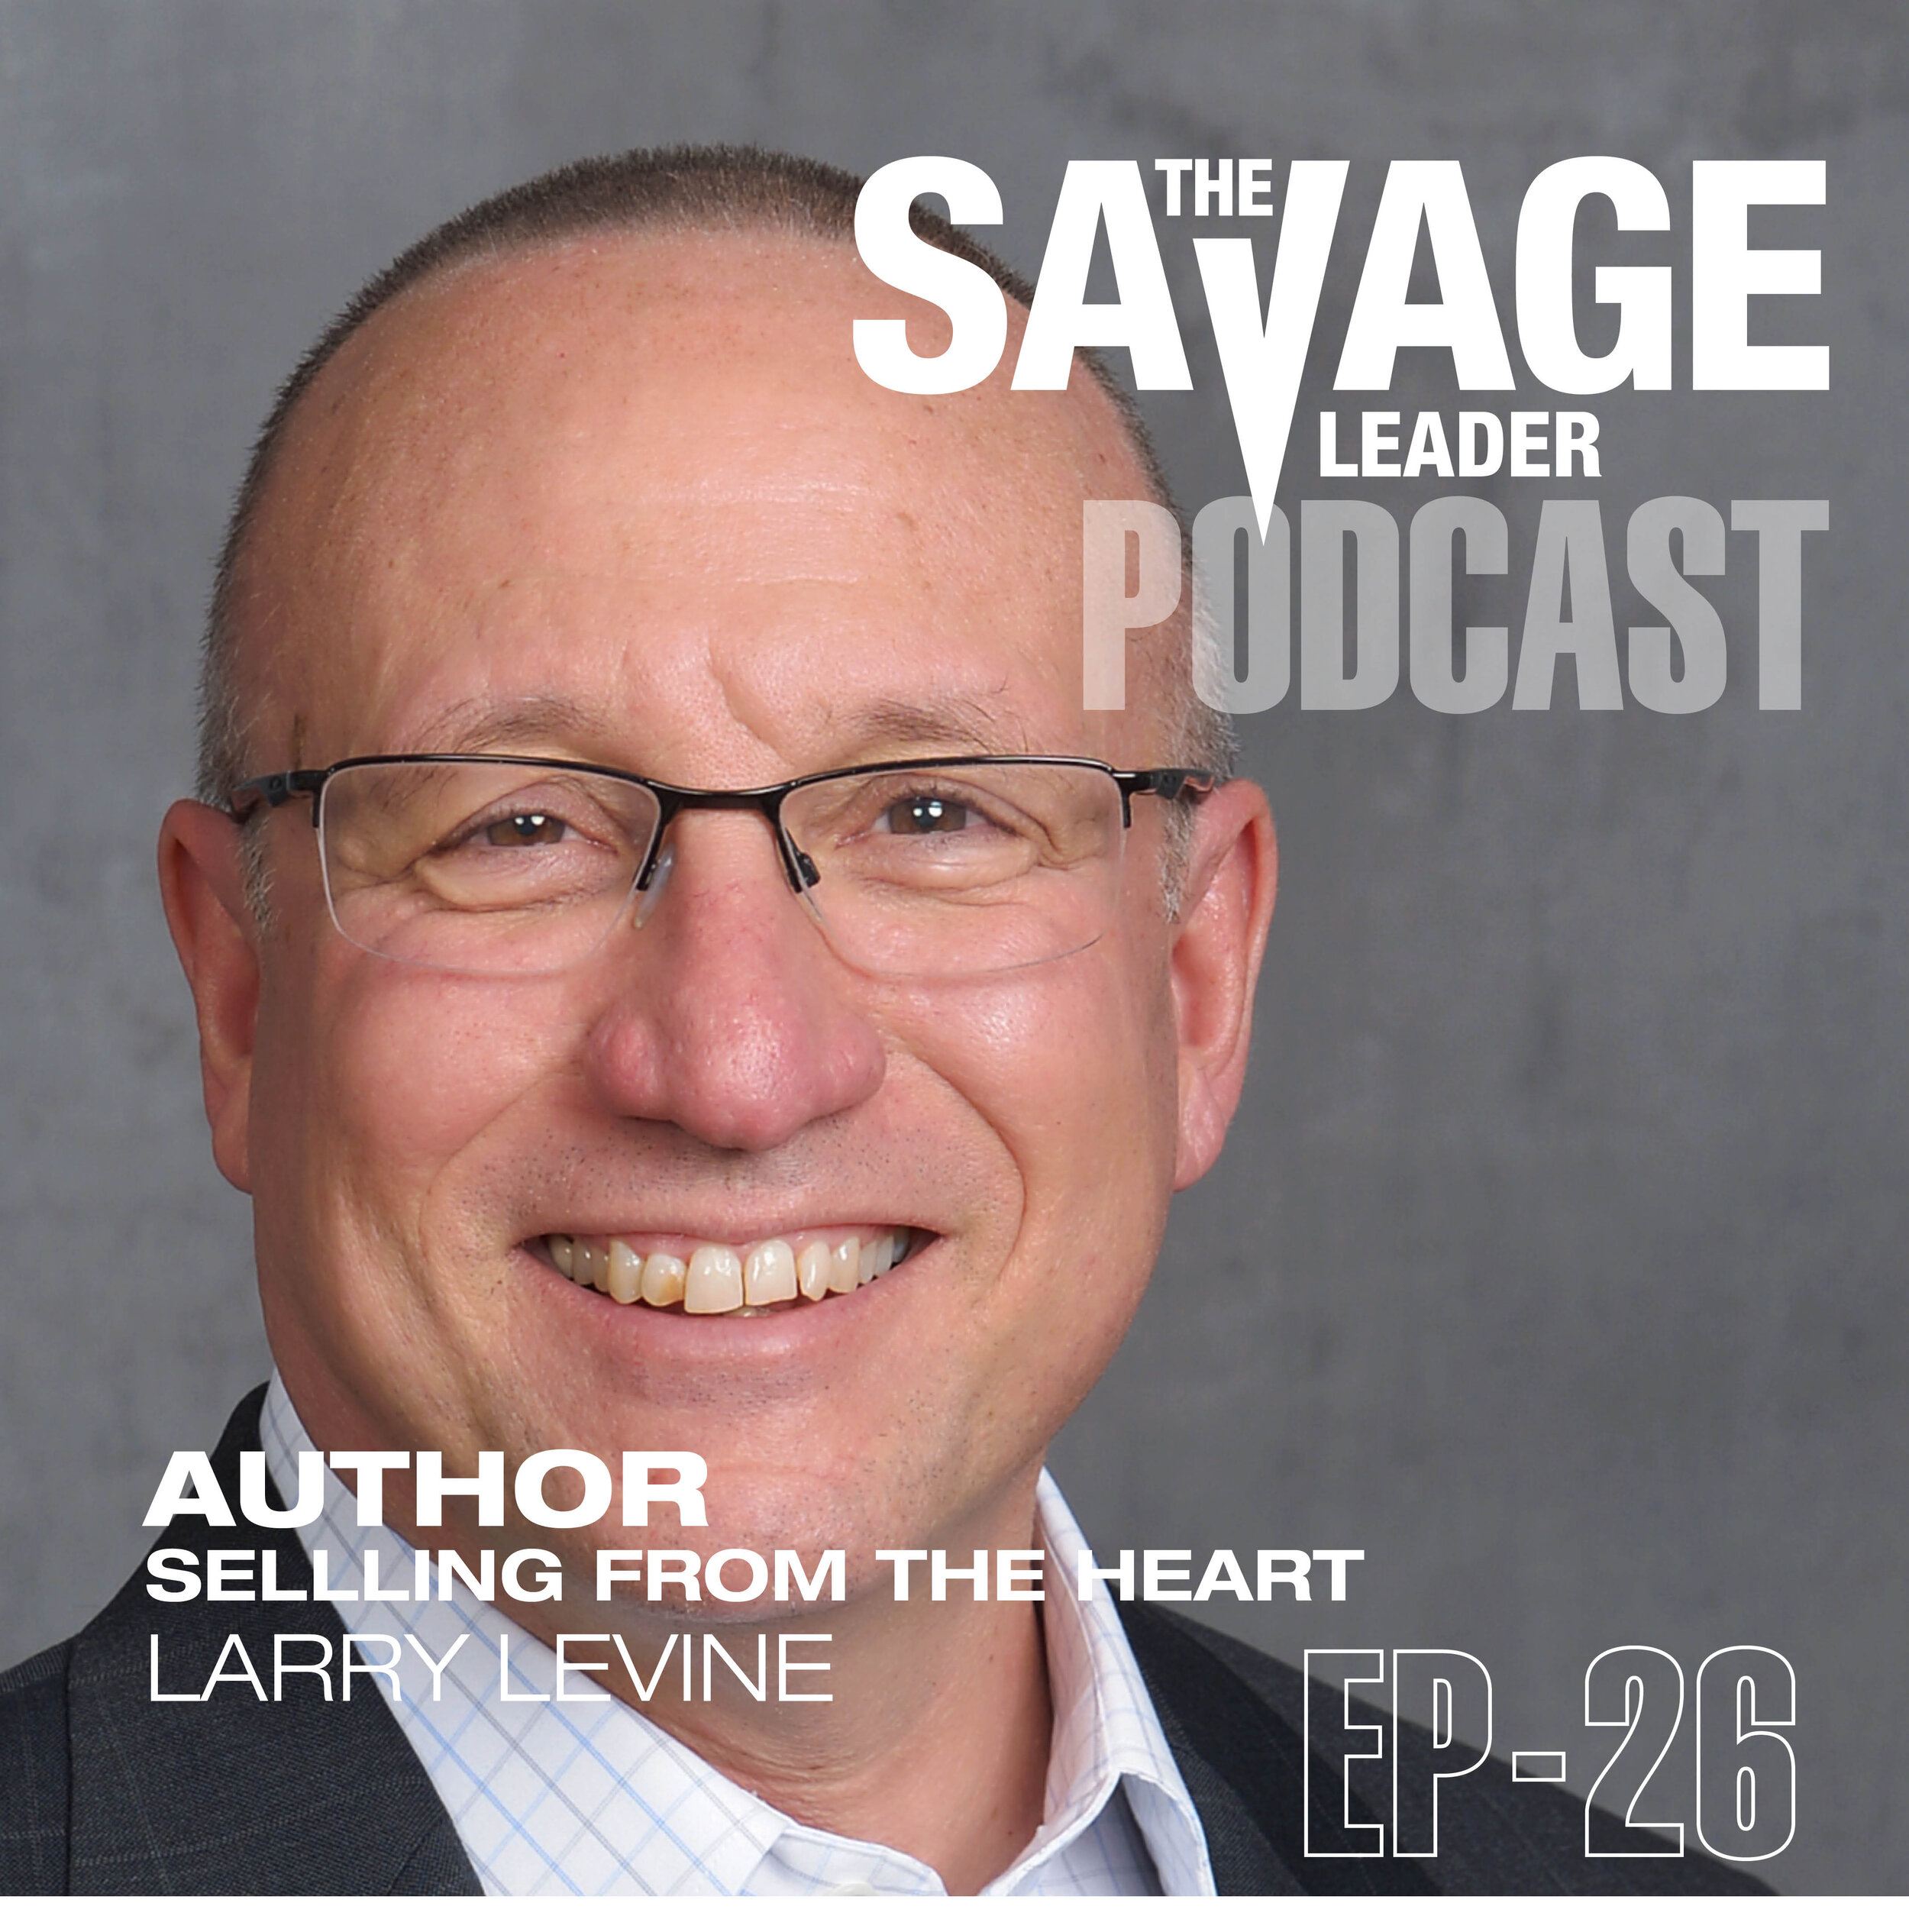 https://images.squarespace-cdn.com/content/v1/60a583238306cd37a280ace0/1634174259295-HTPKSUT0L68JCPLX9UMY/Larry+Levine+on+The+Savage+Leader+Podcast.jpg